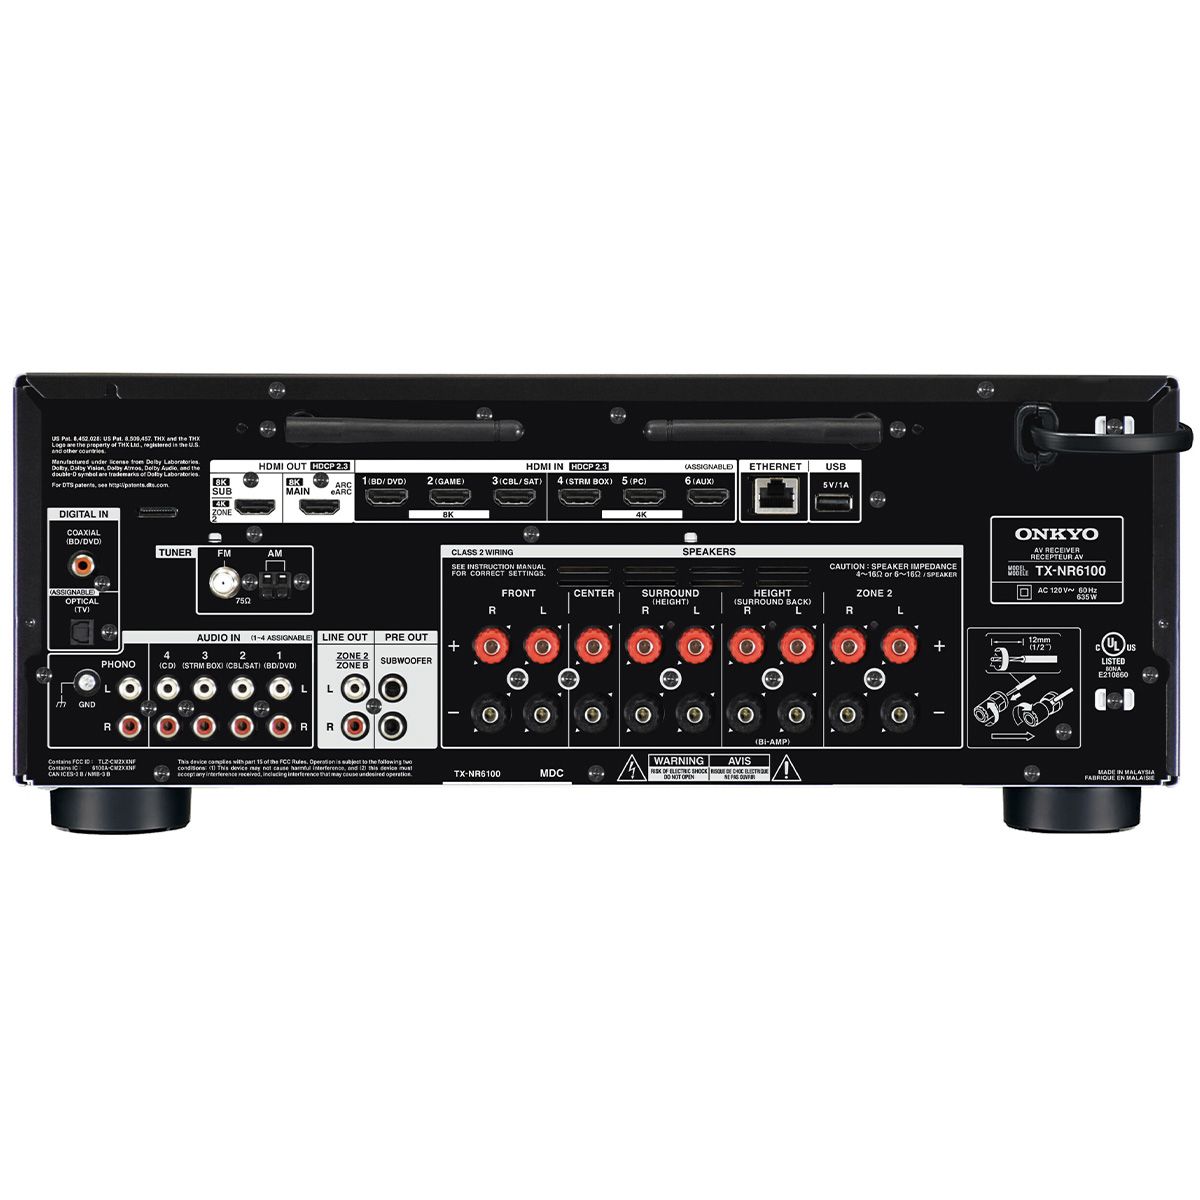 Onkyo TX-NR6100 rear panel inputs